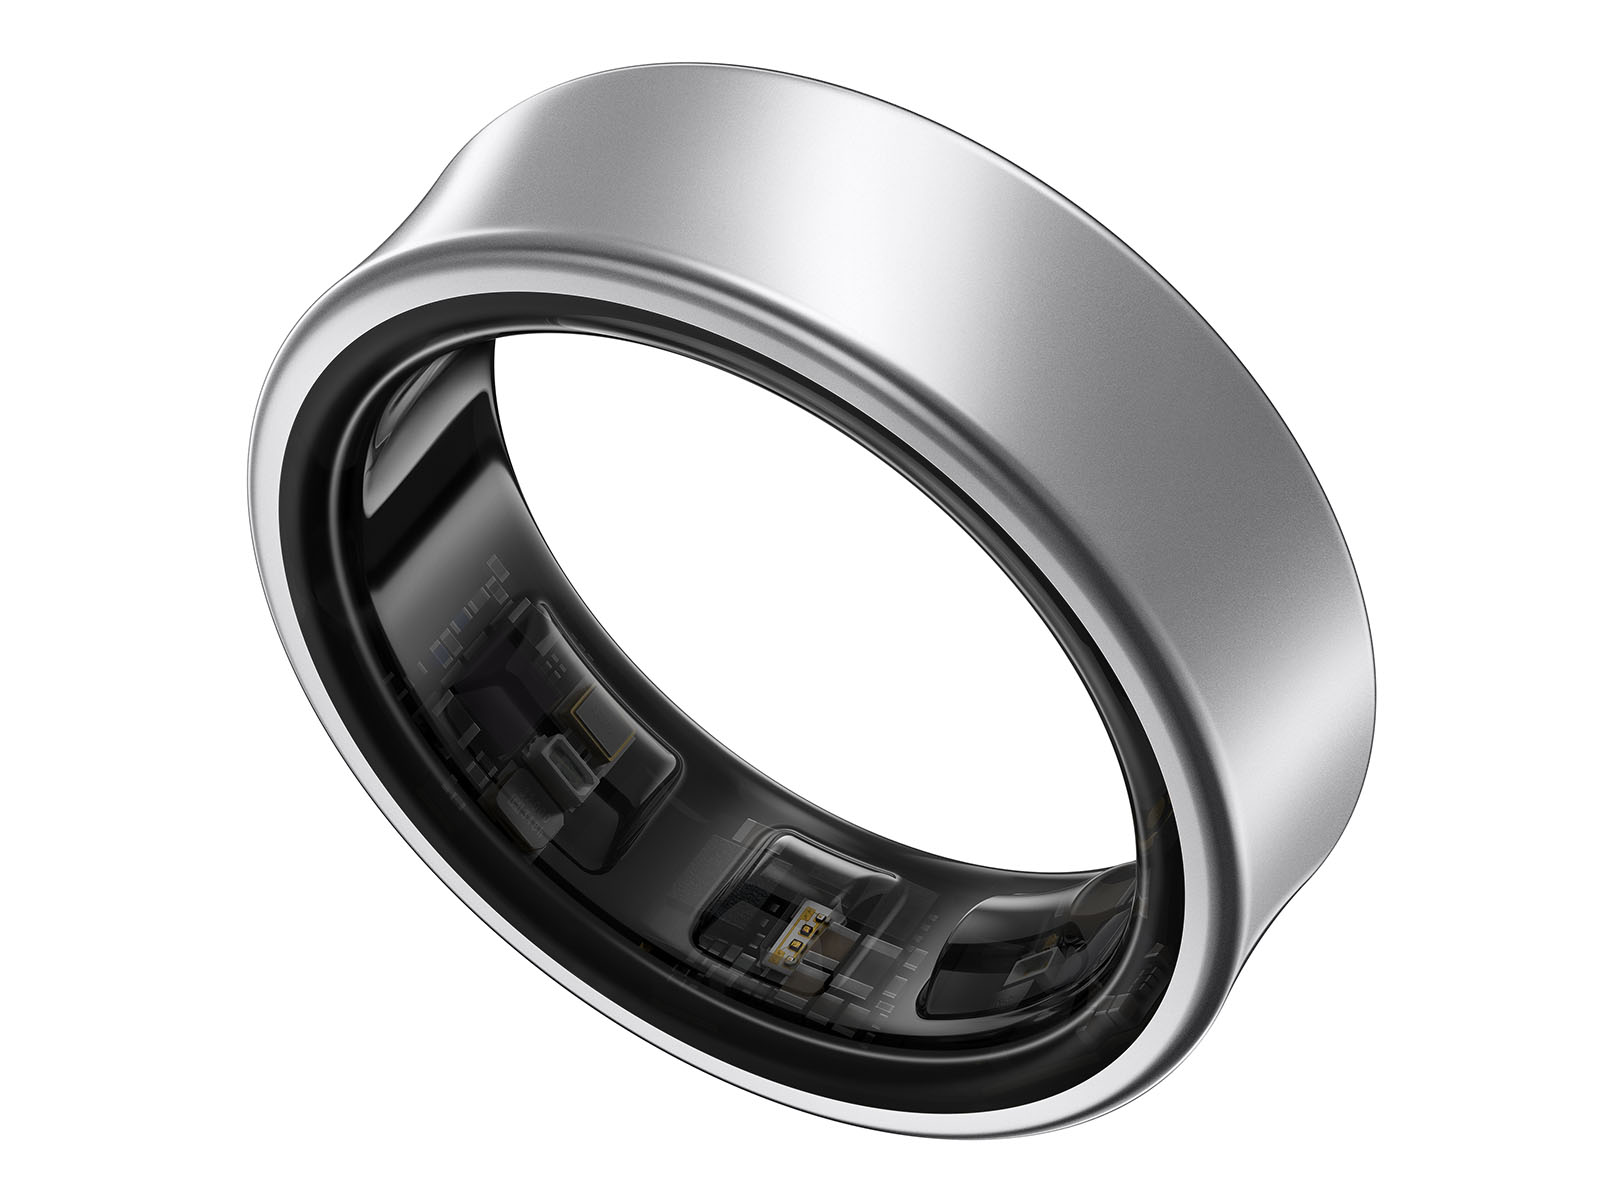 Thumbnail image of Galaxy Ring, Size 12, Titanium Silver